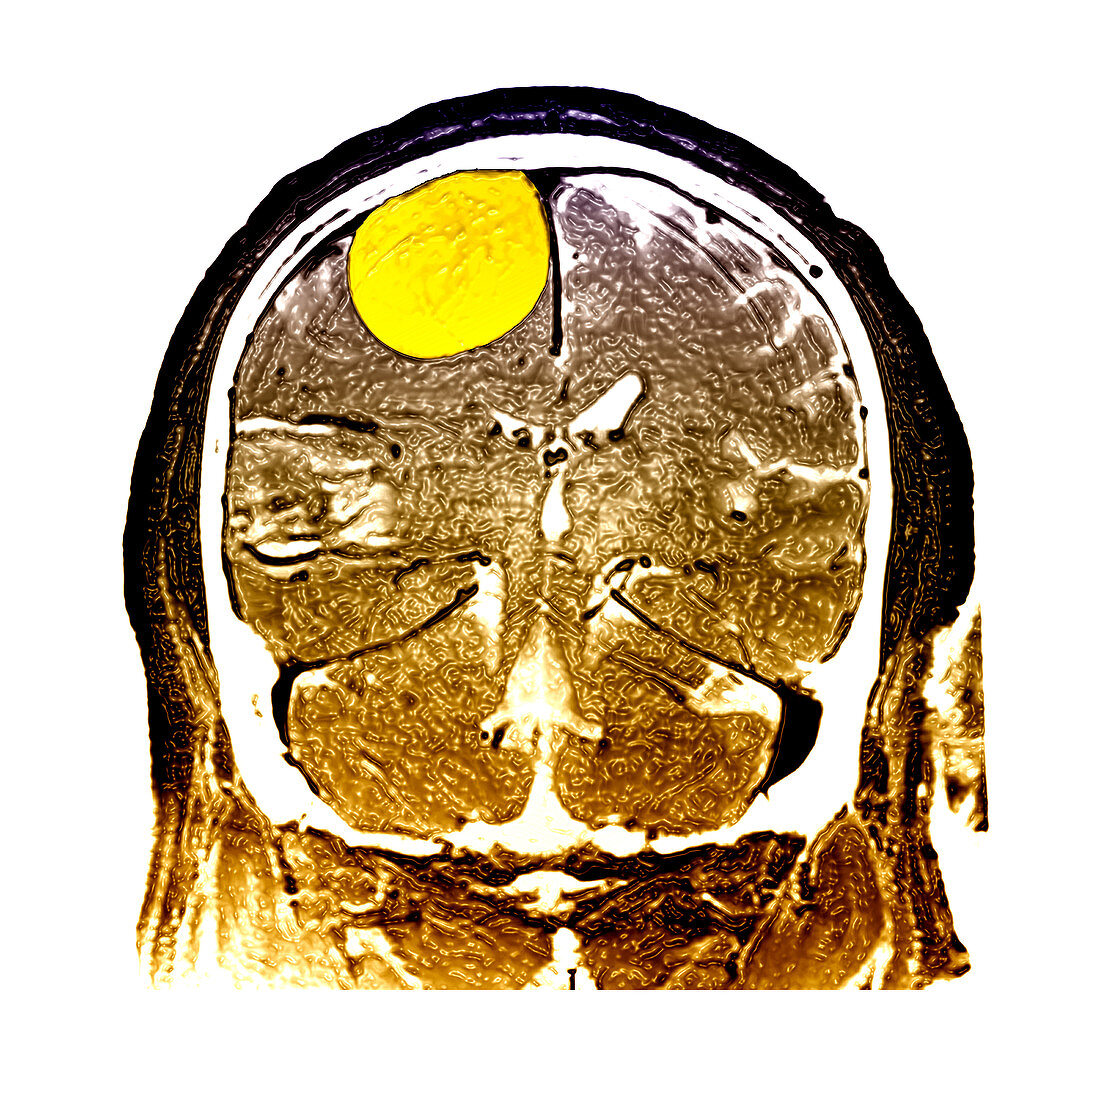 Enhanced Large Meningioma on MRI